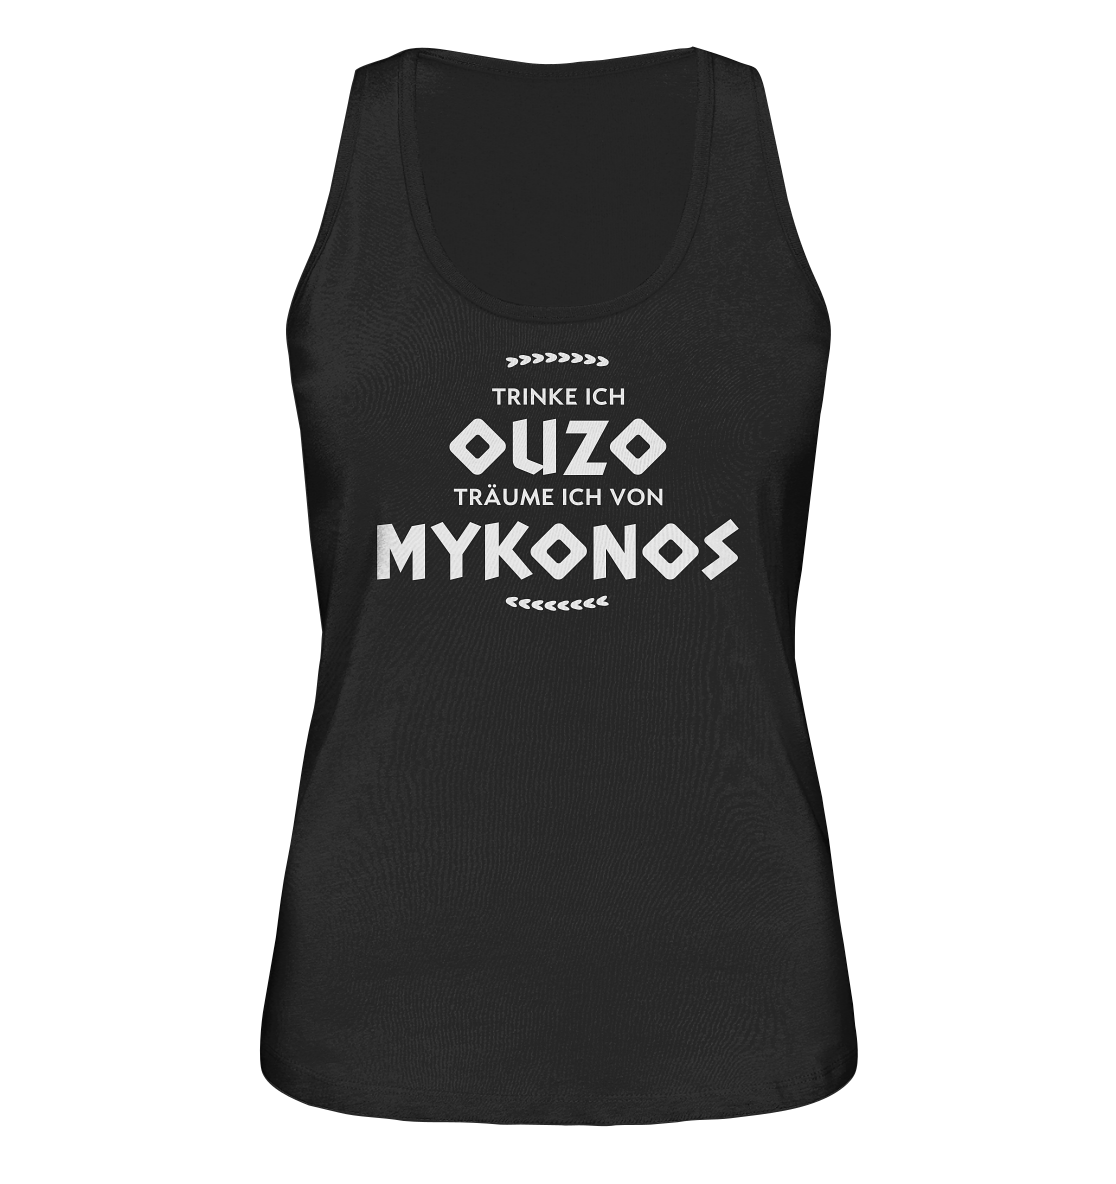 When I drink Ouzo I dream of Mykonos - Ladies Organic Tank Top